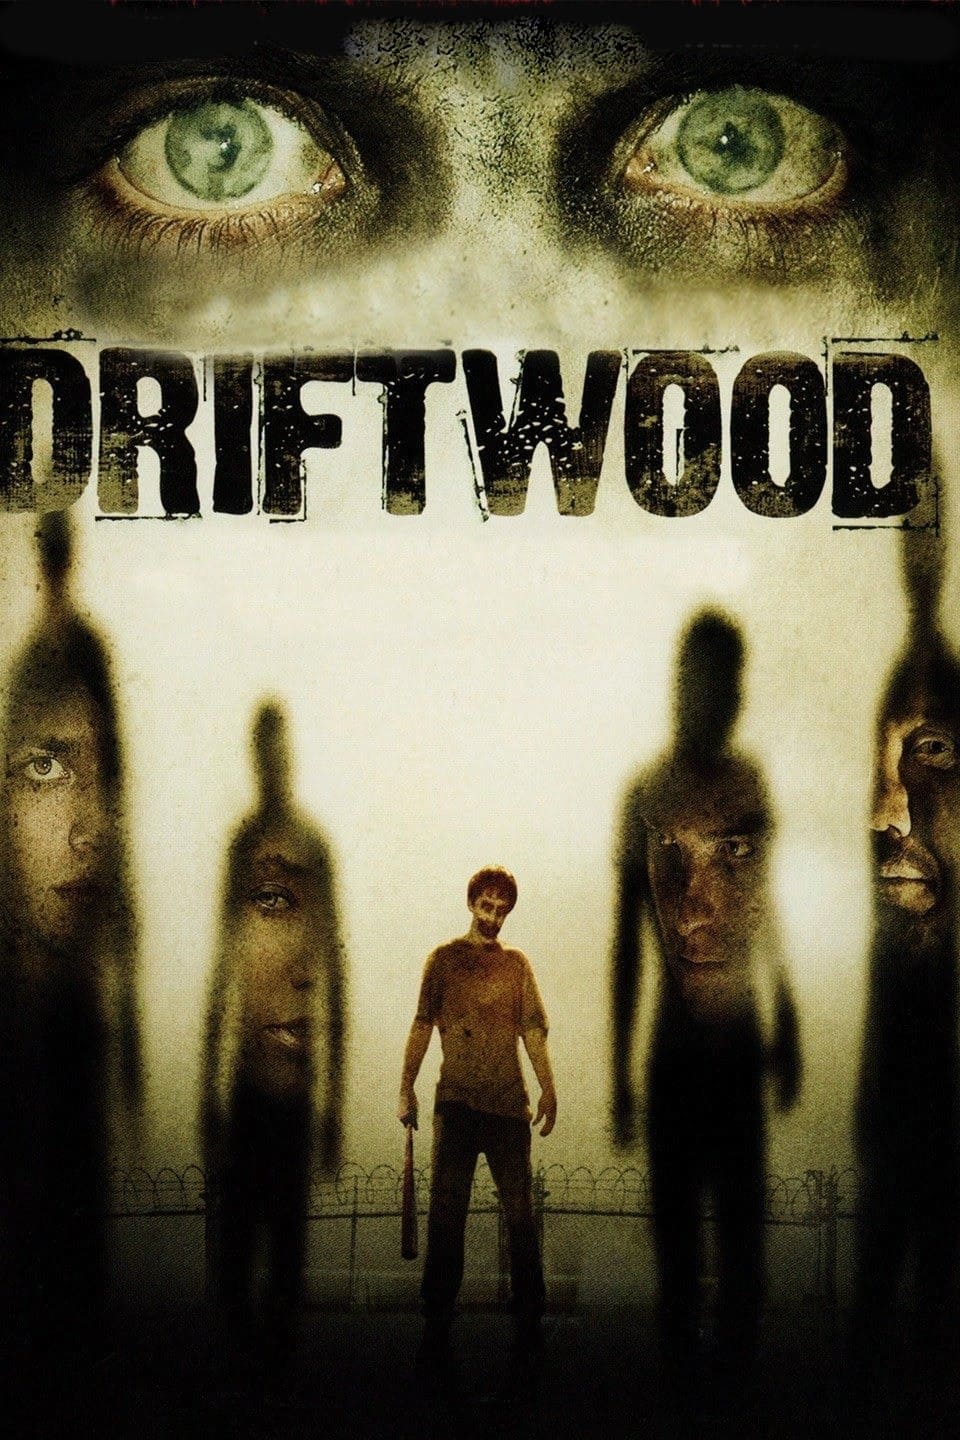 Driftwood (2006)